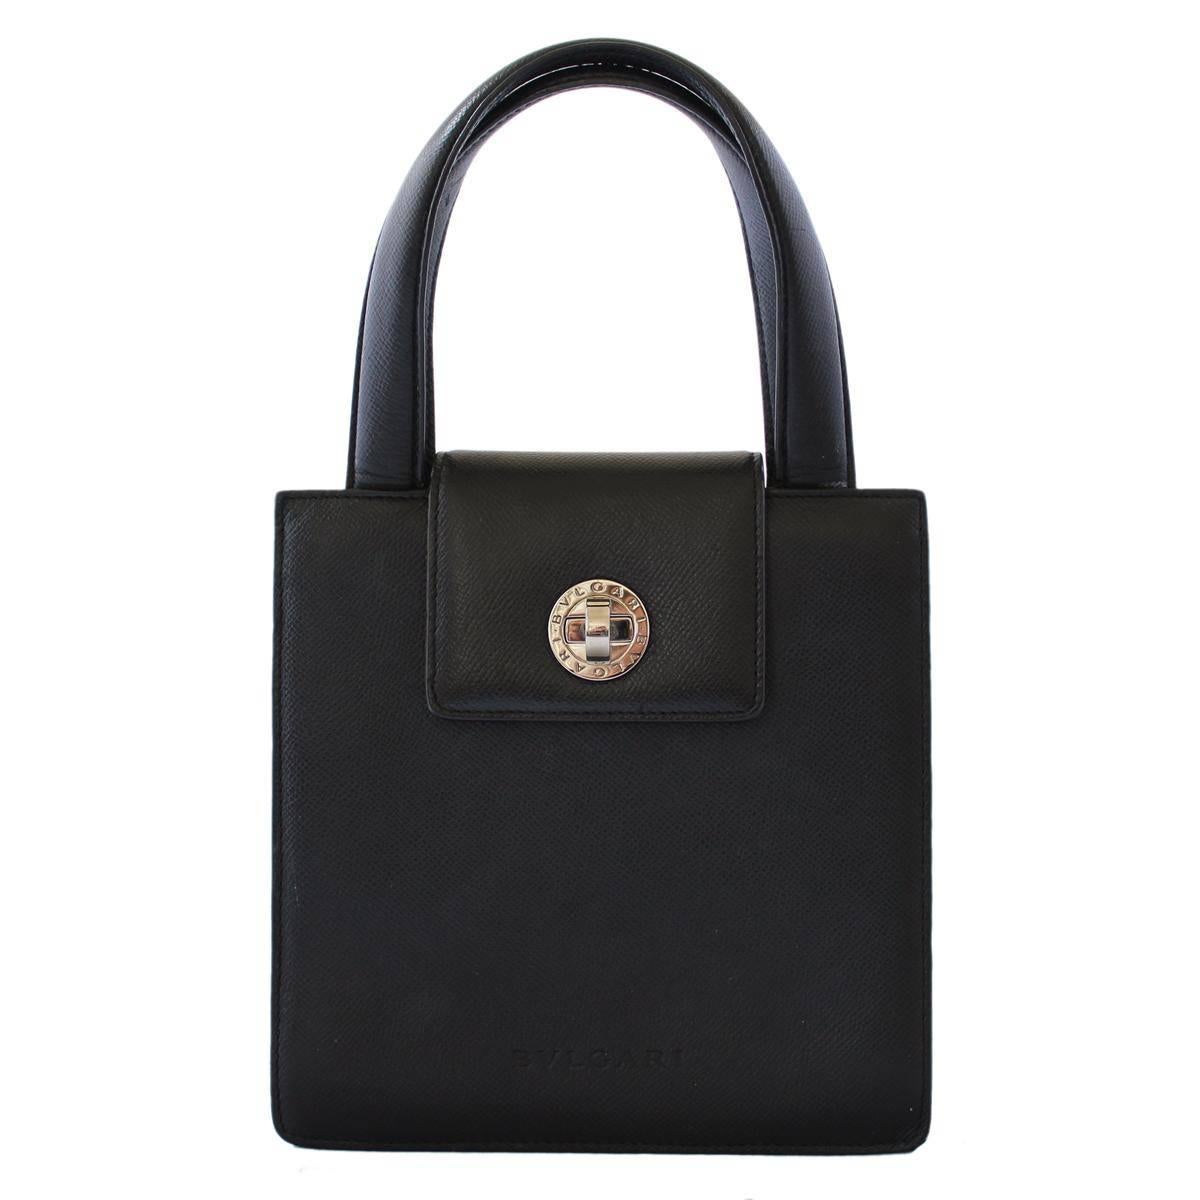 Bulgari Black Leather Bag